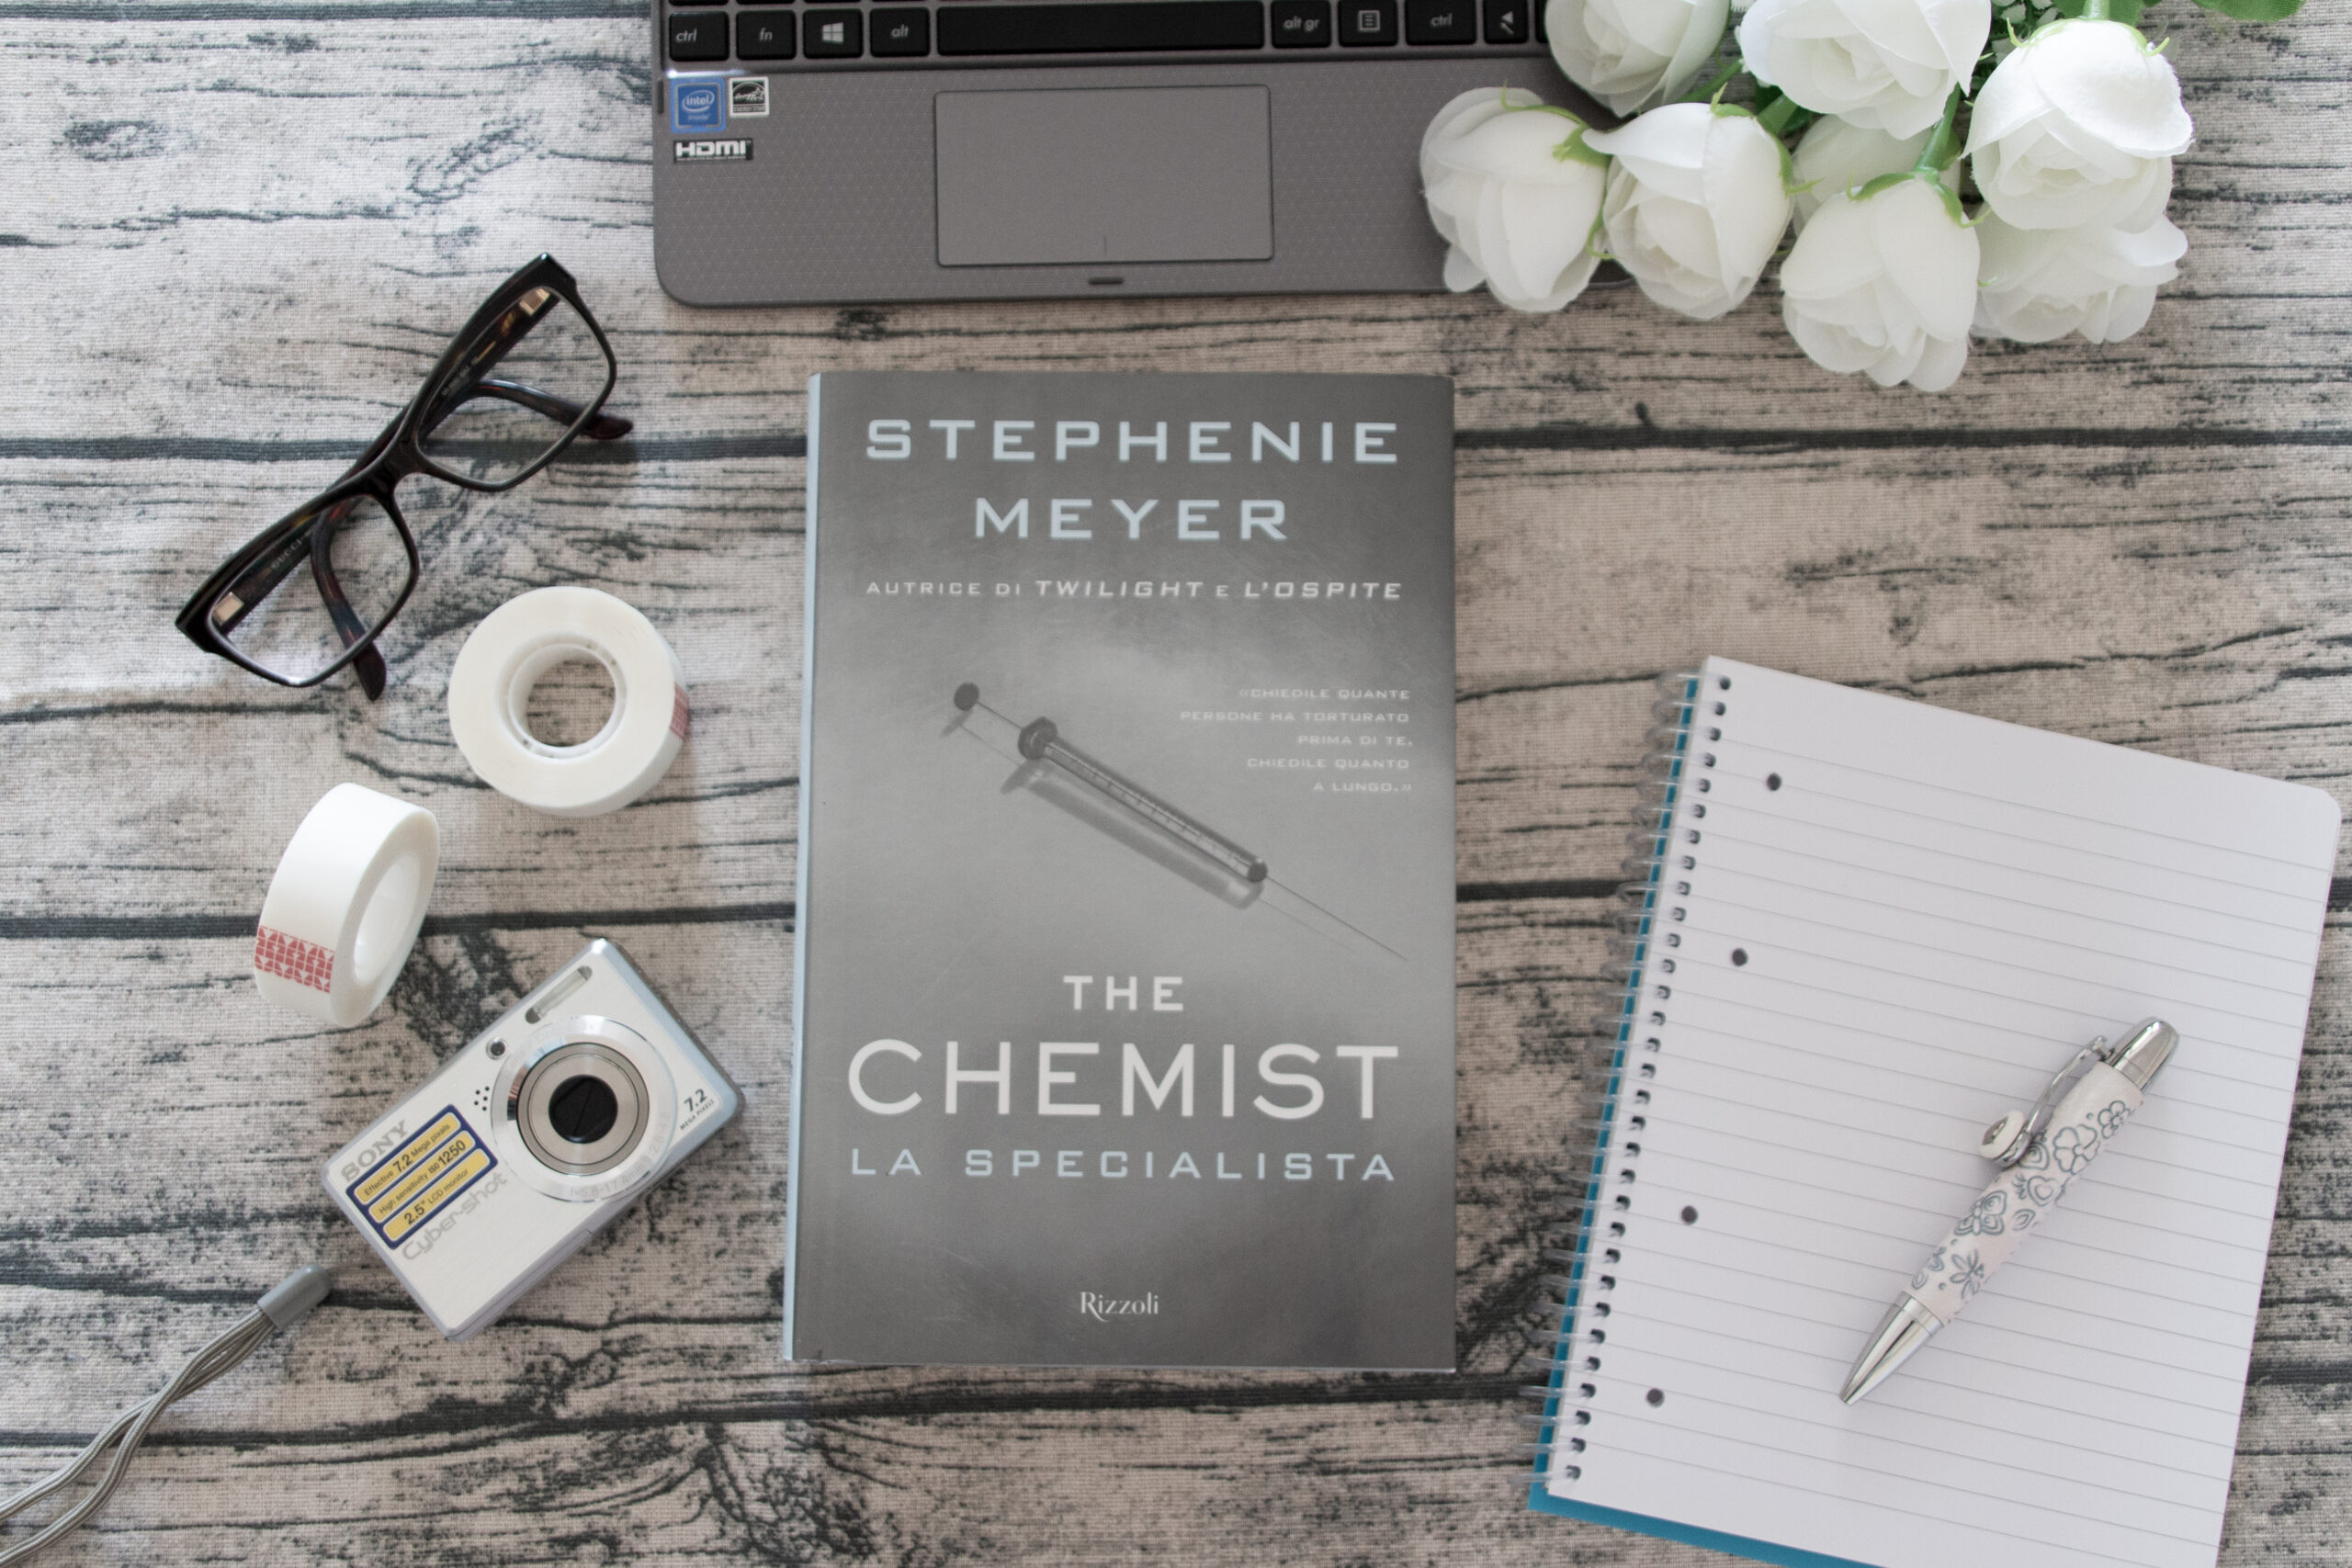 Recensione: “The Chemist – la specialista” di Stephenie Meyer